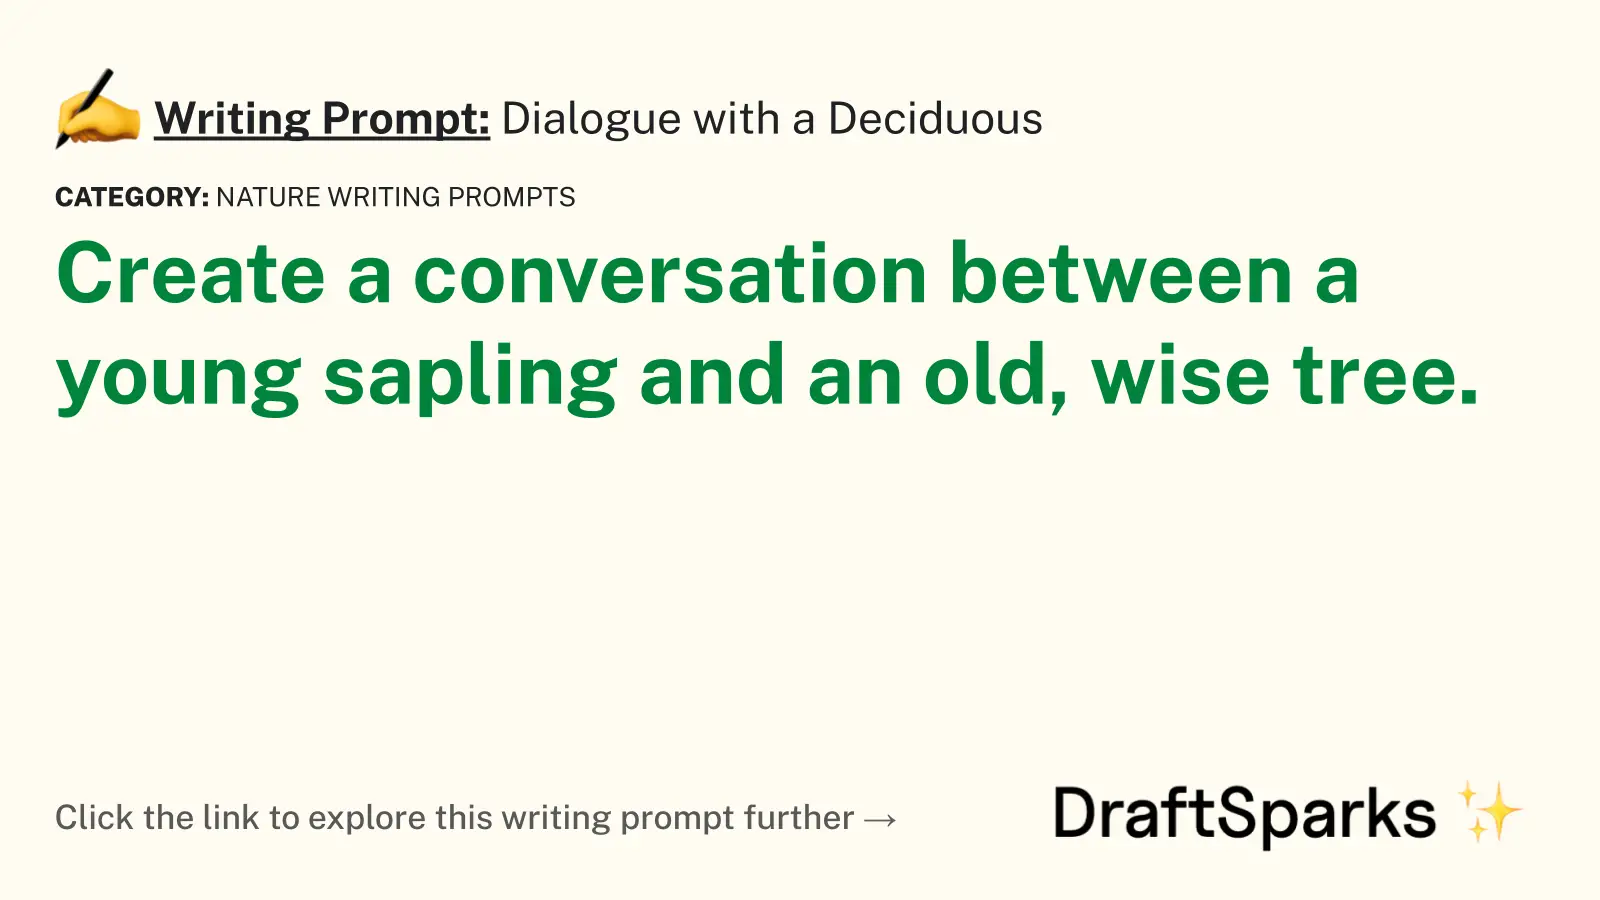 Dialogue with a Deciduous